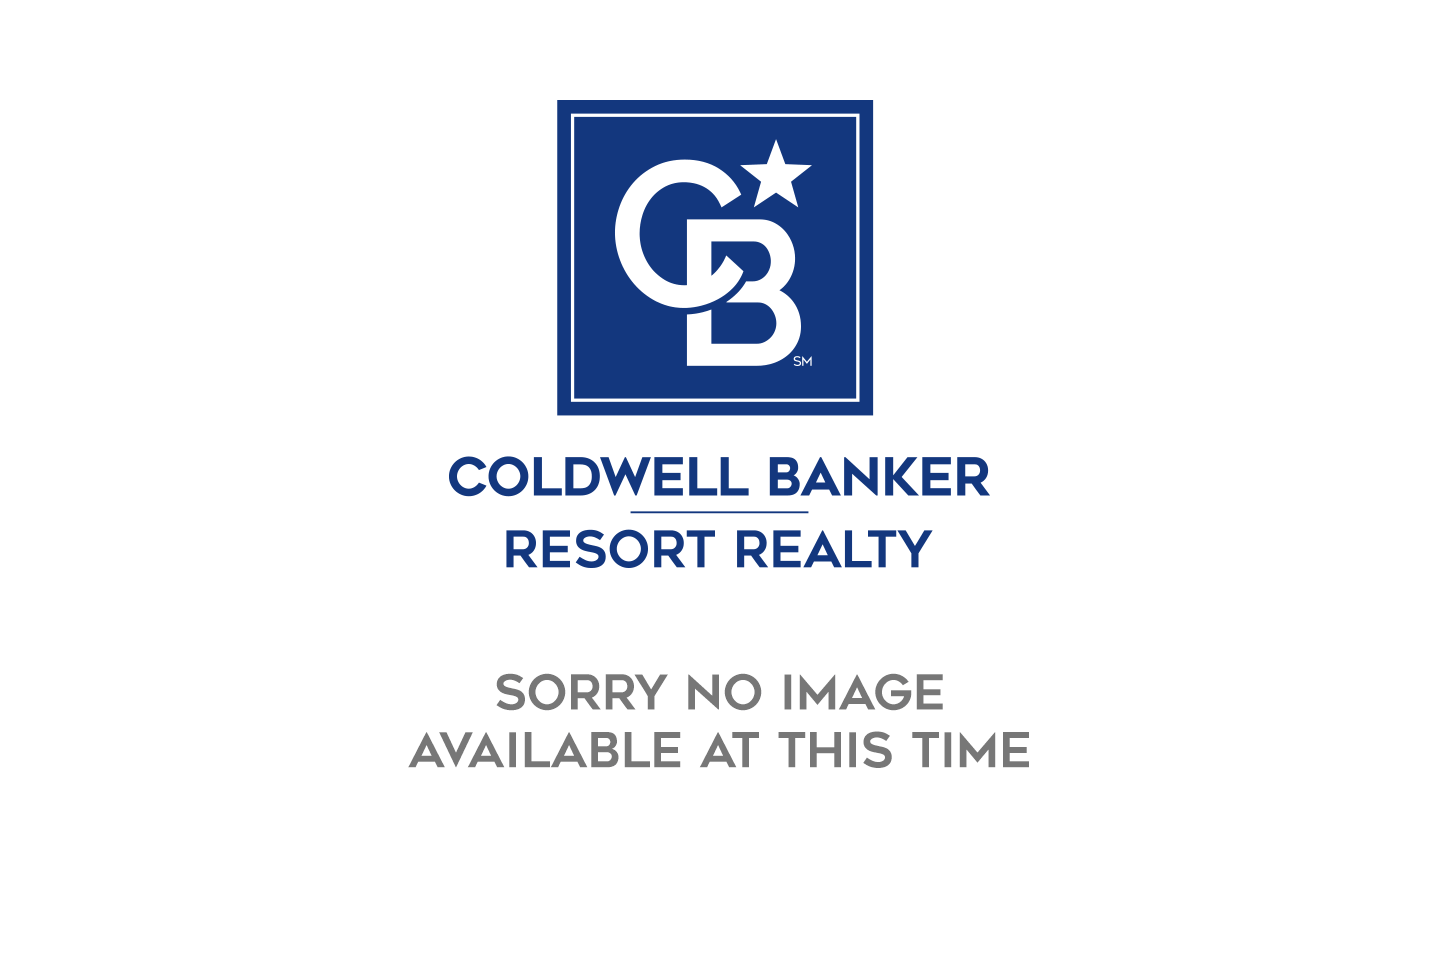 noimage Greenwood - Coldwell Banker Resort Realty